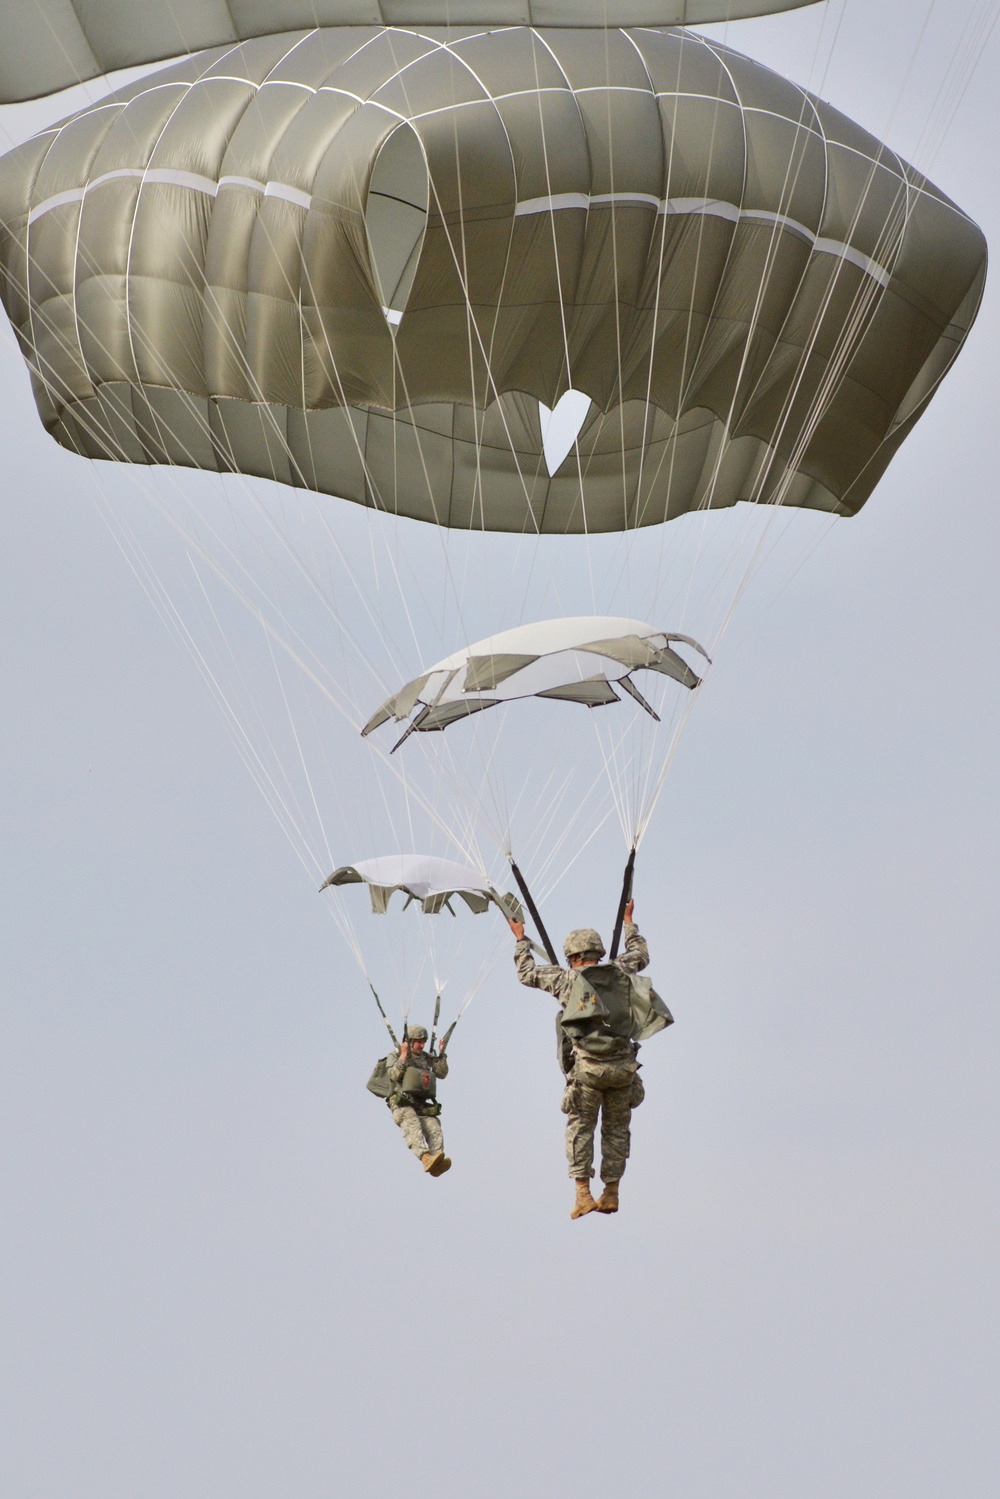 173rd Airborne Brigade NATO Partnered Airborne Operations